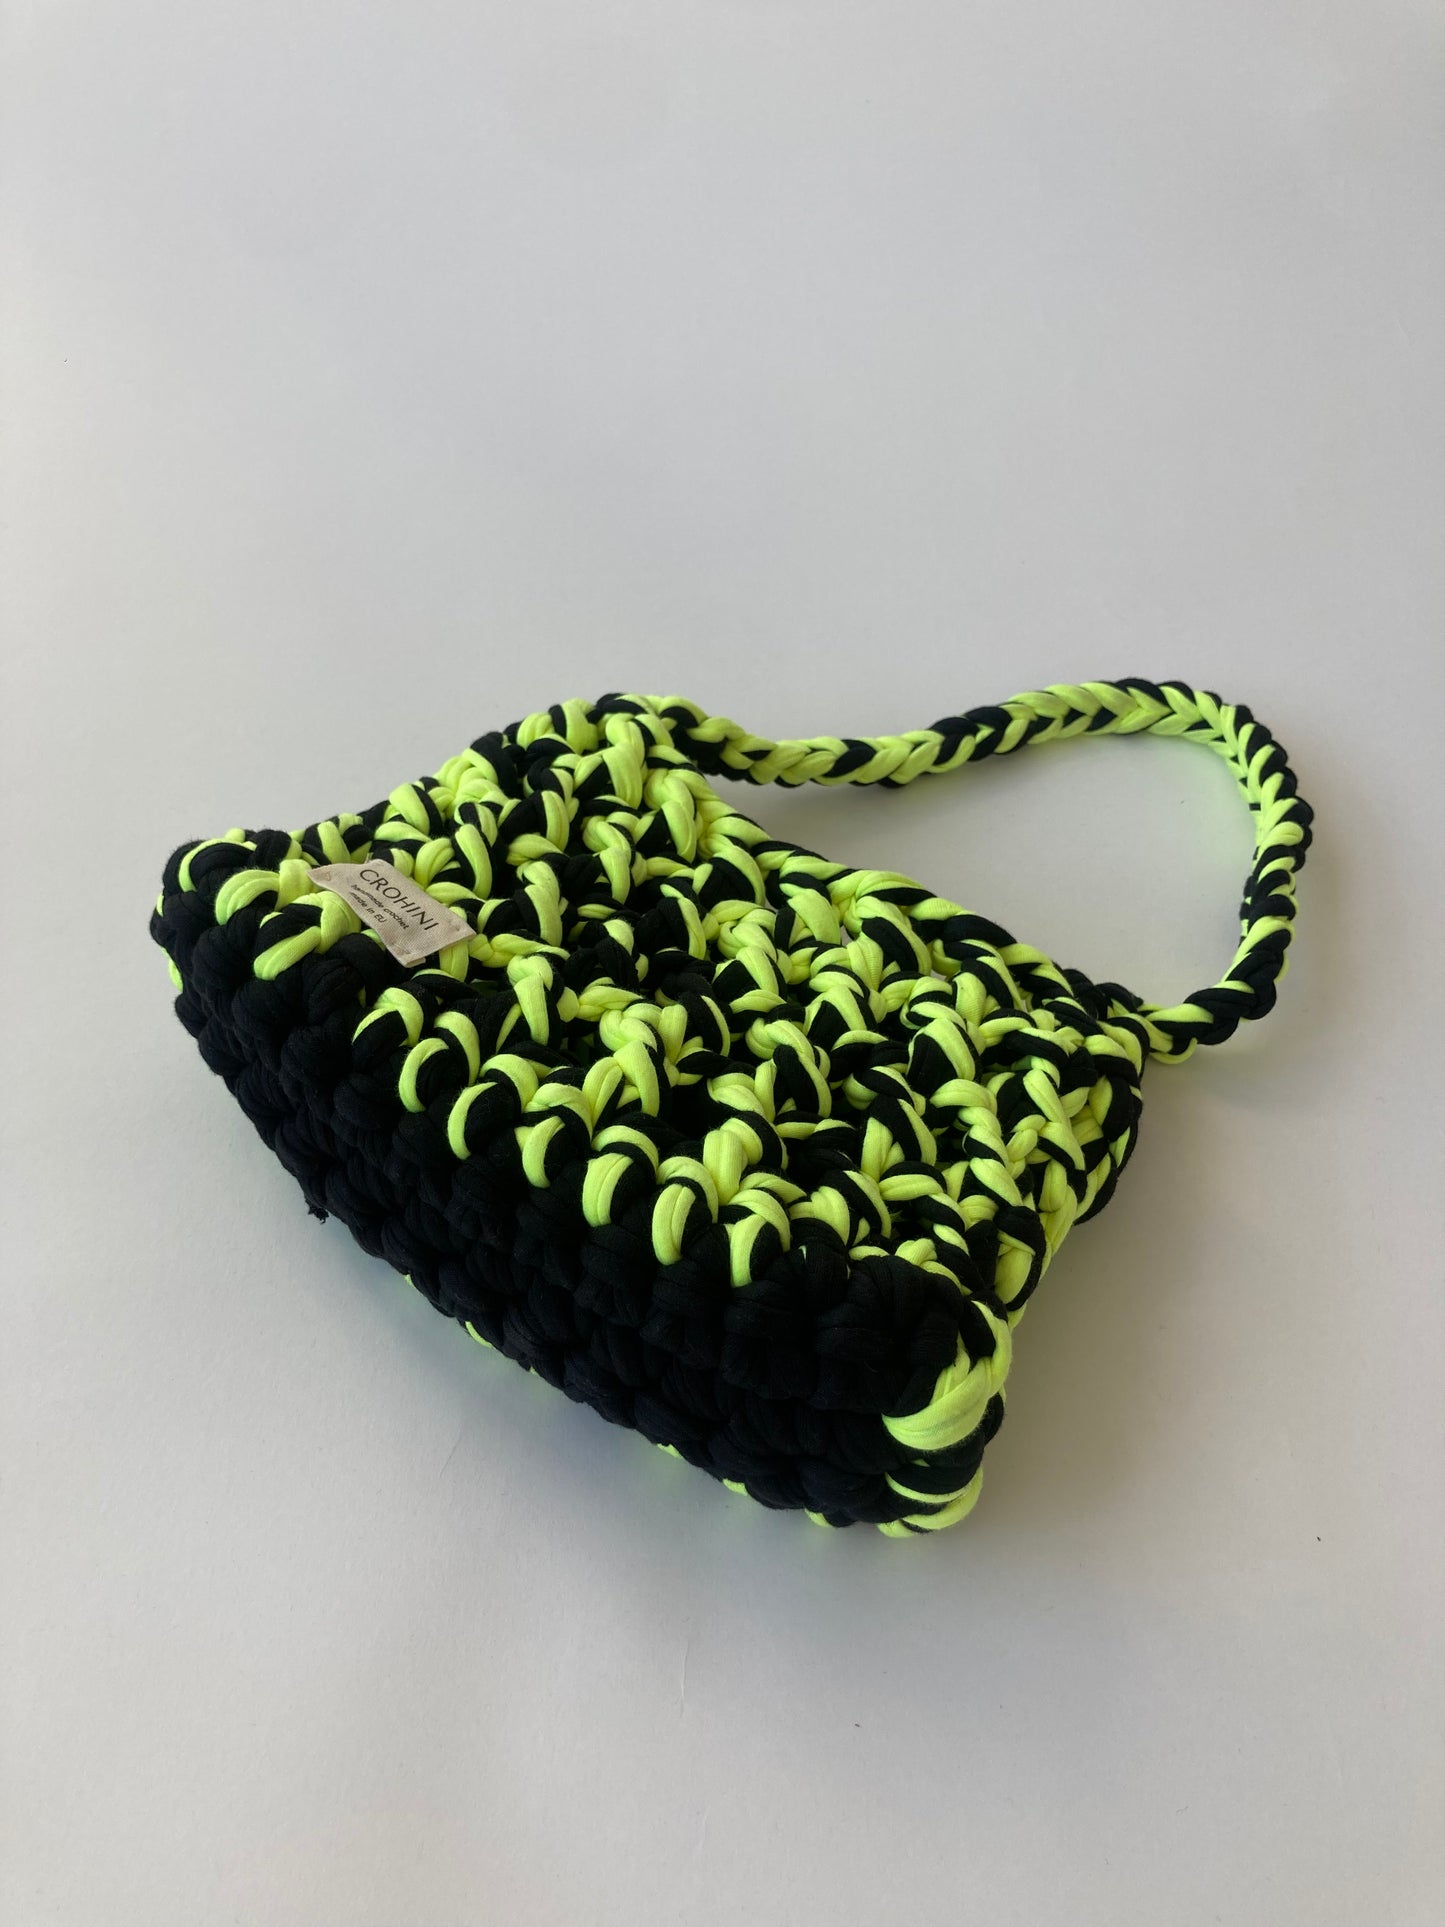 Mini TOM Black and Neon Crochet Bag | Gehäkelte Tasche